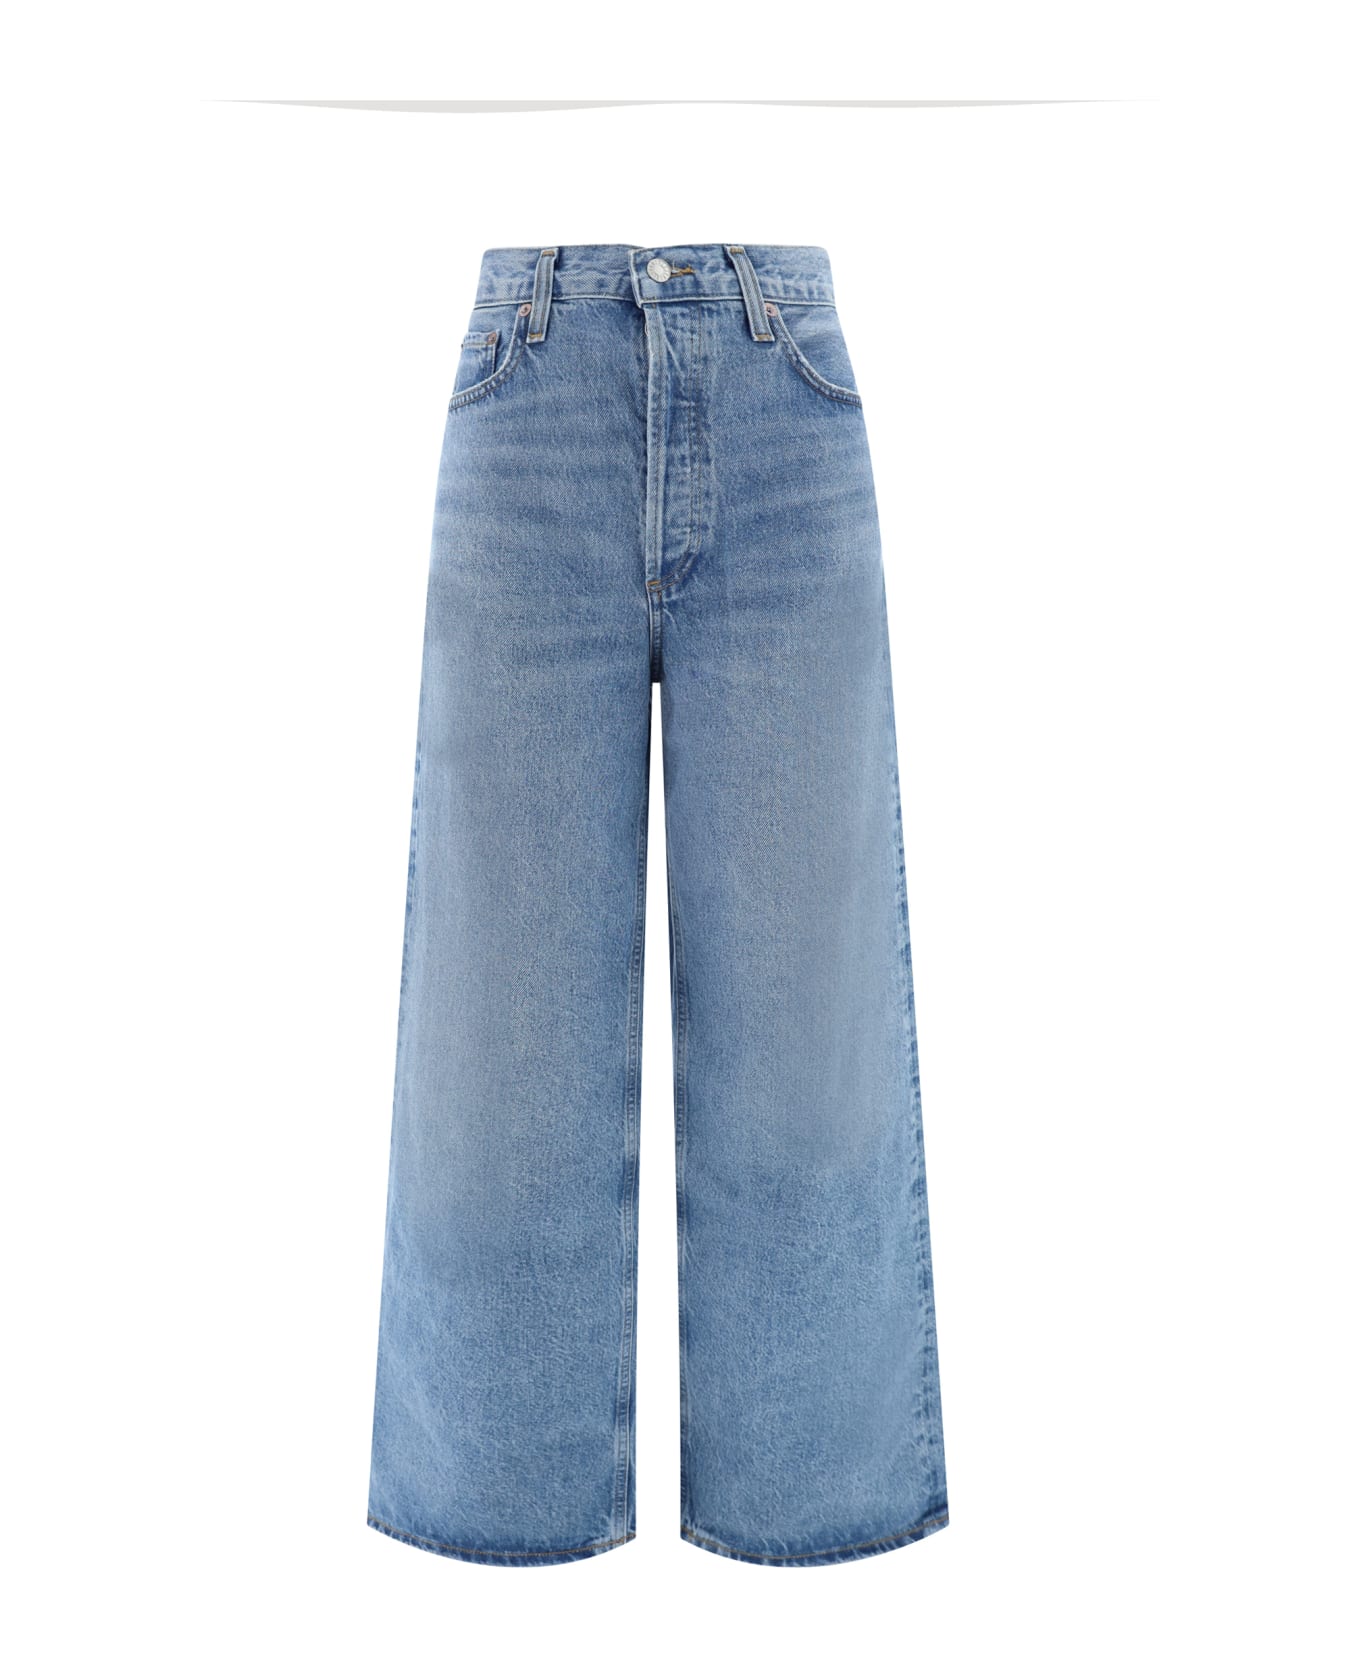 AGOLDE Jeans - BLUE